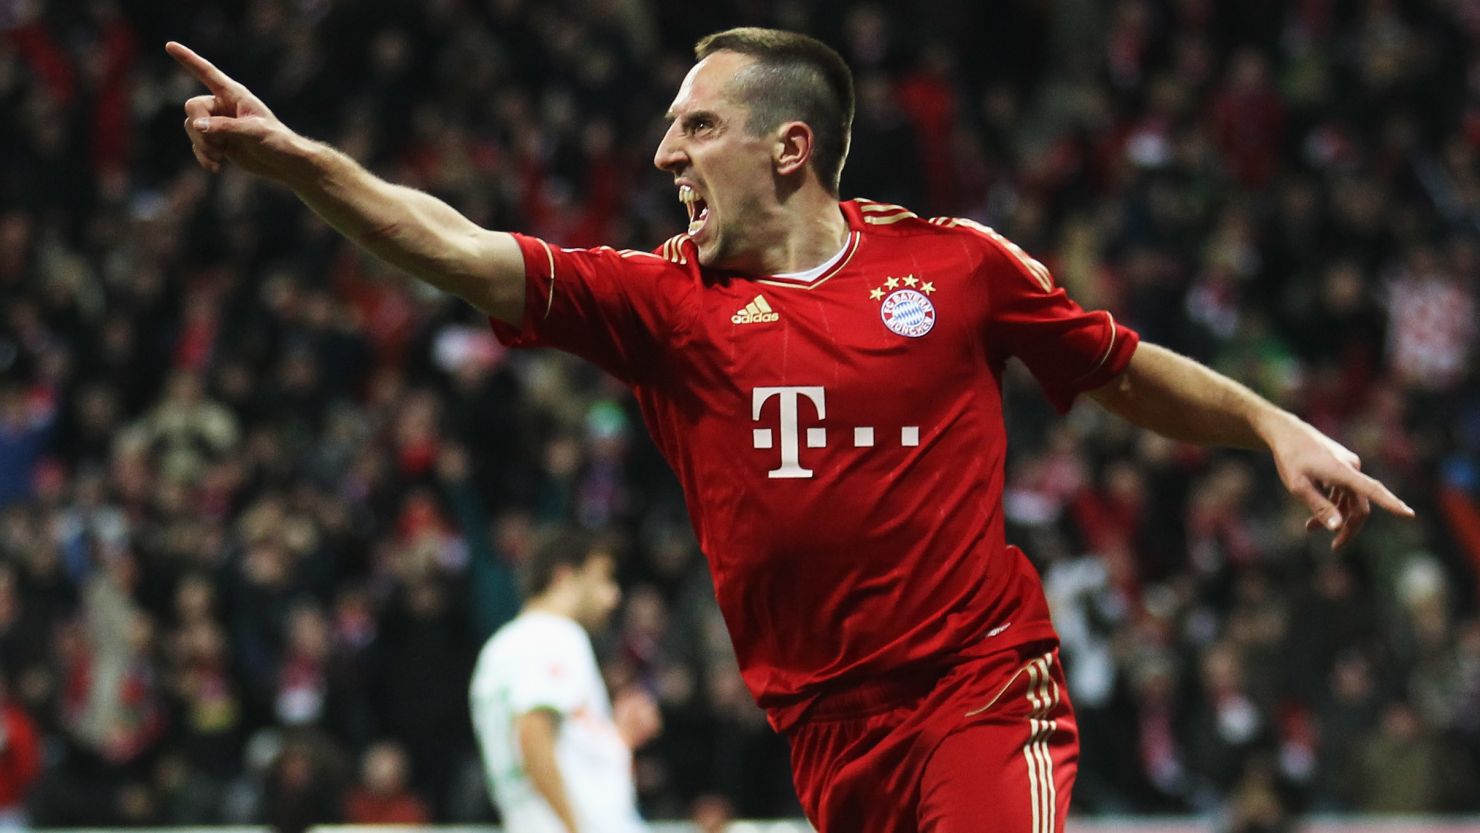 Bayern Munich's Franck Ribery scored twice in Saturday's 4-1 win over Werder Bremen